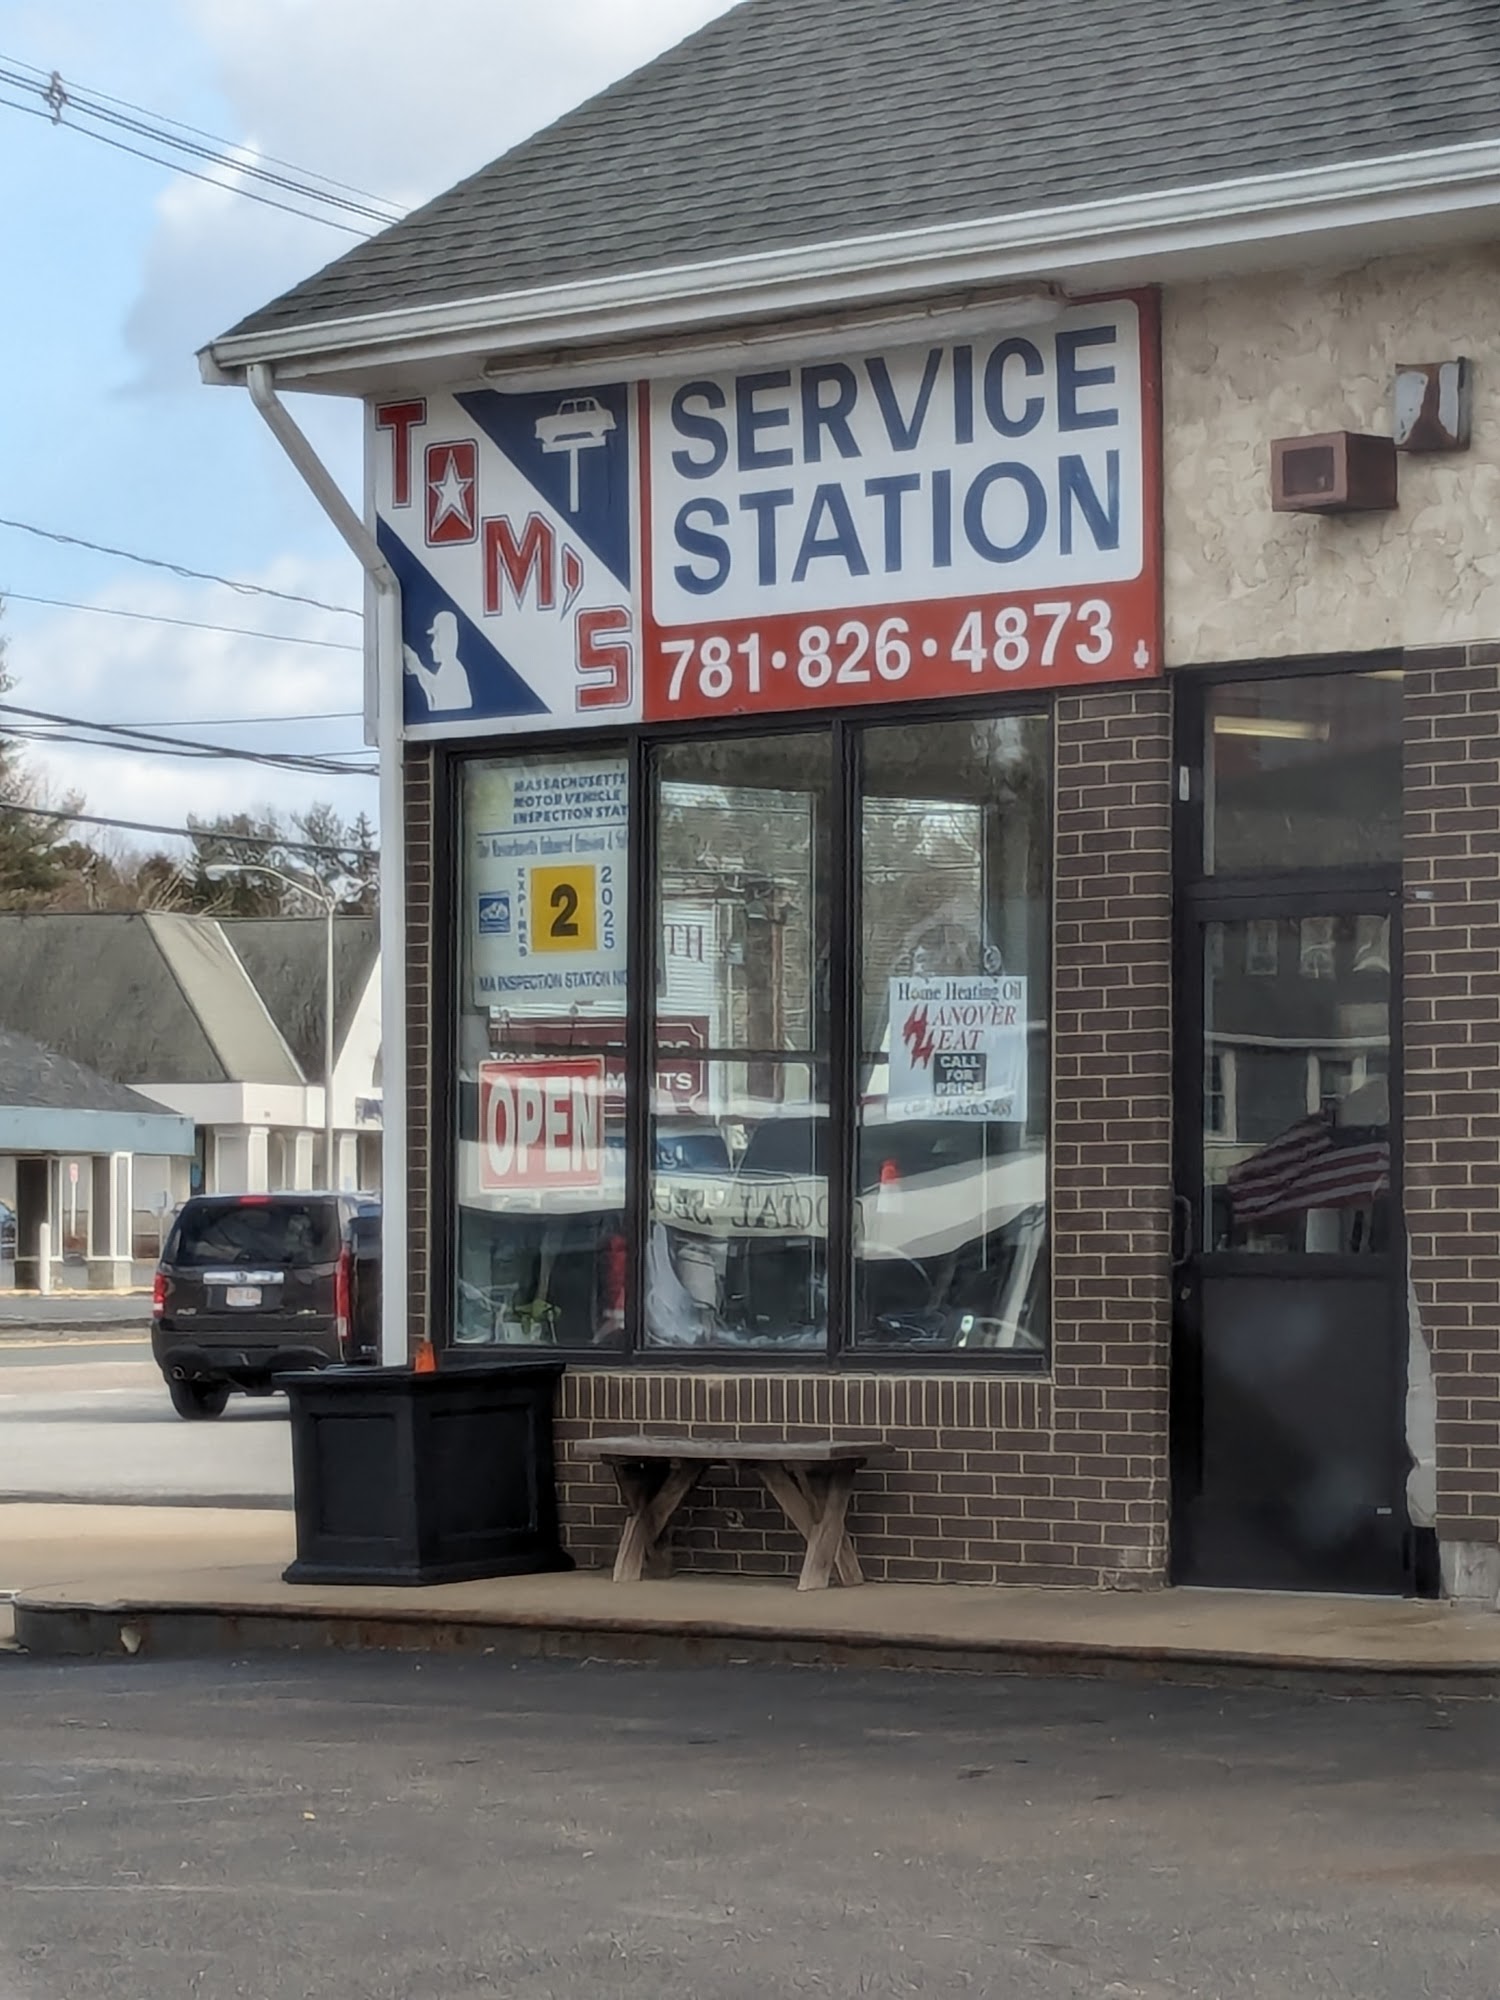 Tom's Service Station